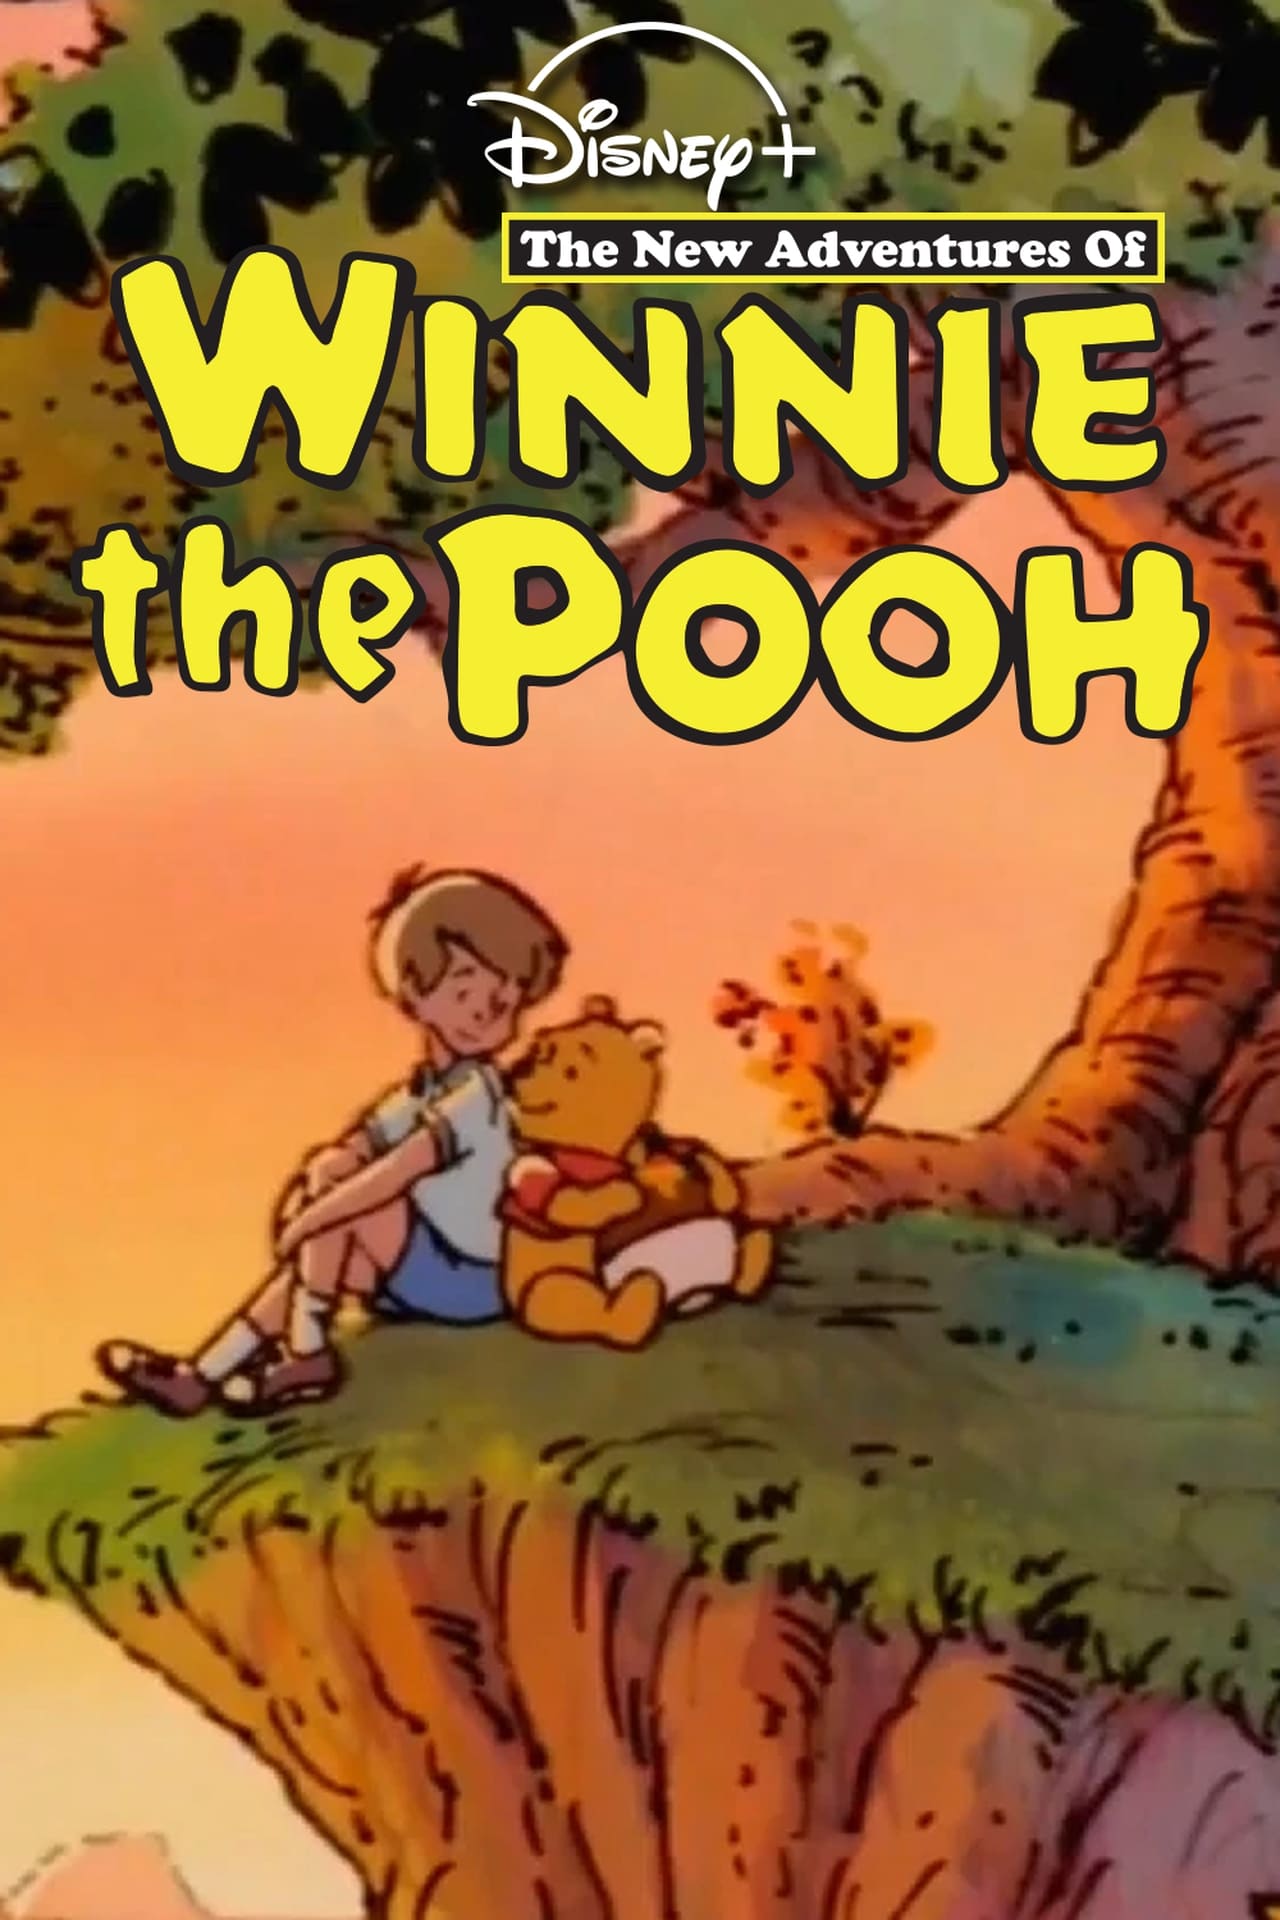 The New Adventures of Winnie the Pooh (1989) S1 EP01&EP06 128Kbps 23.976Fps 48Khz 2.0Ch Disney+ DD+ E-AC3 Turkish Audio TAC